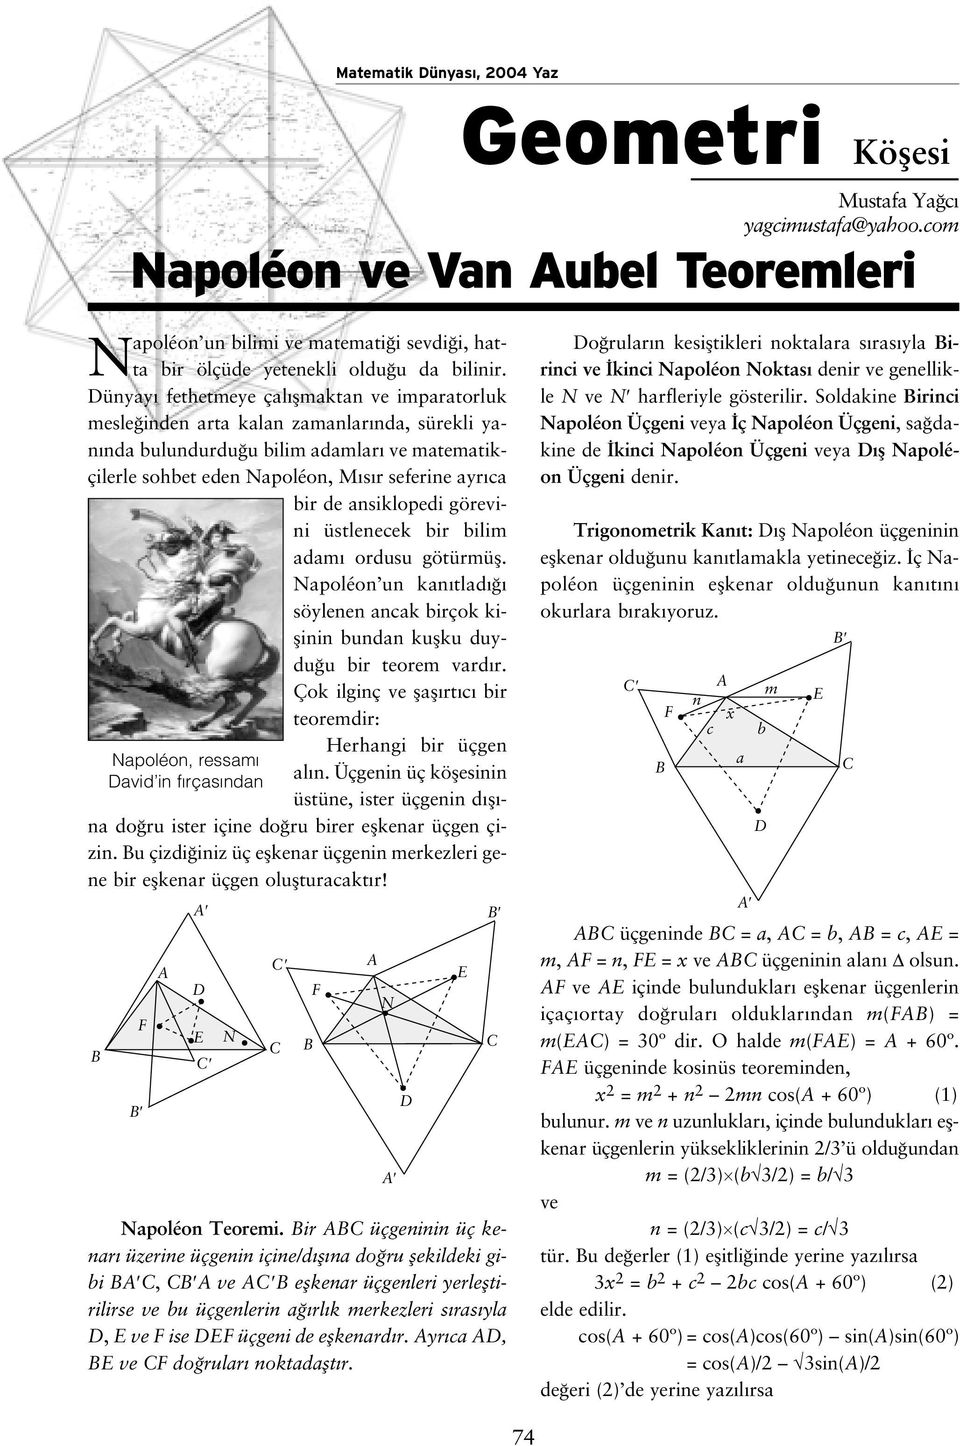 ilim dm ordusu götürmüfl. Npoléon un kn tld söylenen nk irçok kiflinin undn kuflku duydu u ir teorem vrd r. Çok ilginç ve flfl rt ir teoremdir: Herhngi ir üçgen l n.